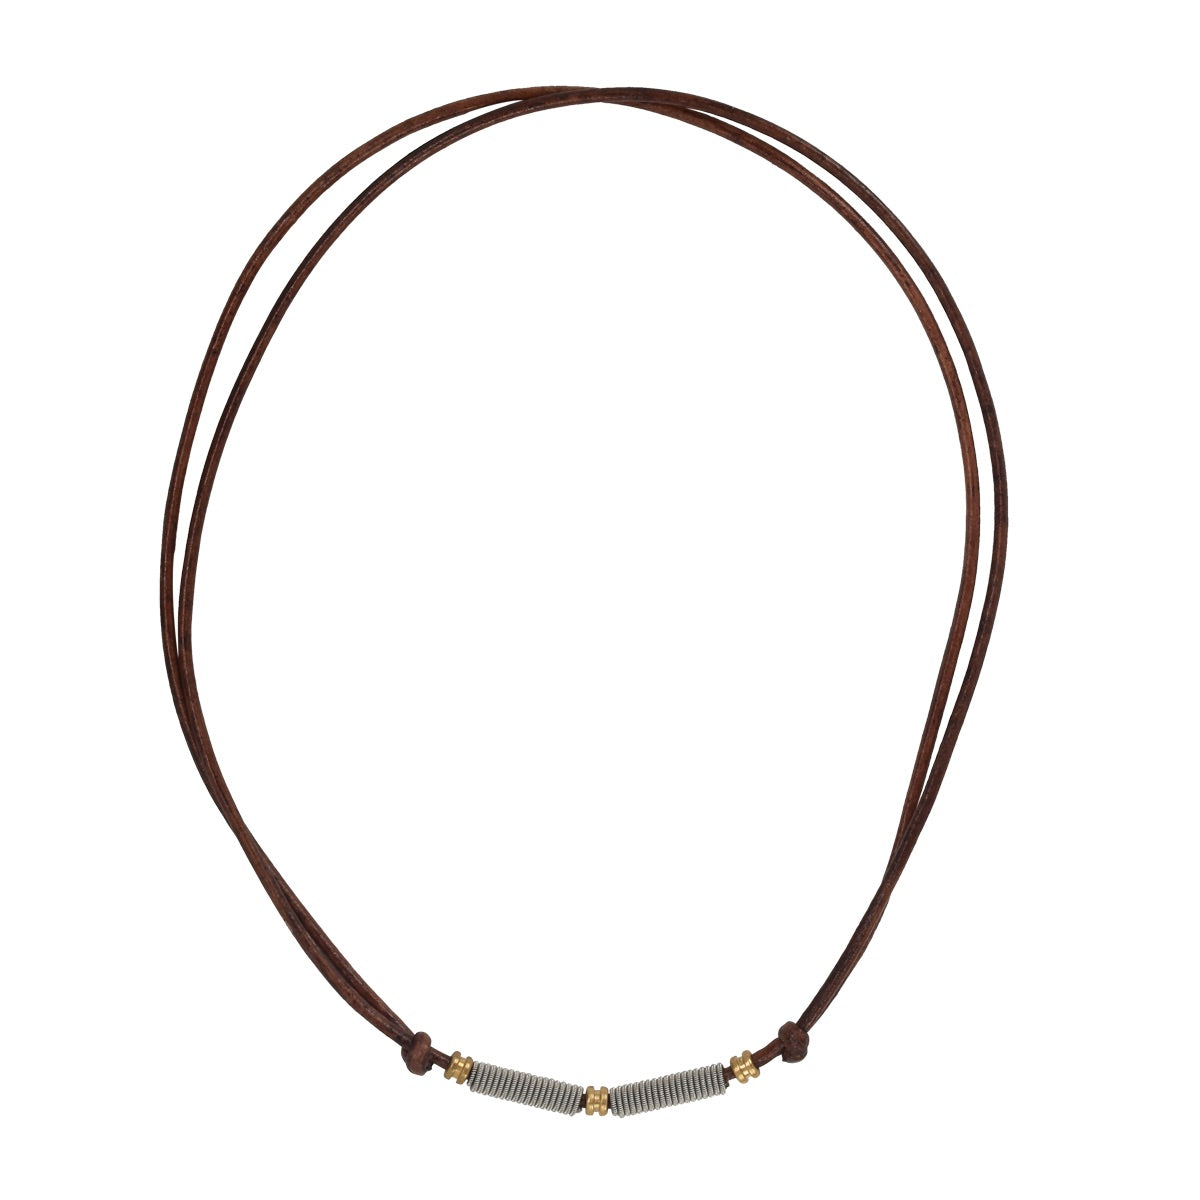 Slipknot Adjustable Leather and Guitar String Necklace